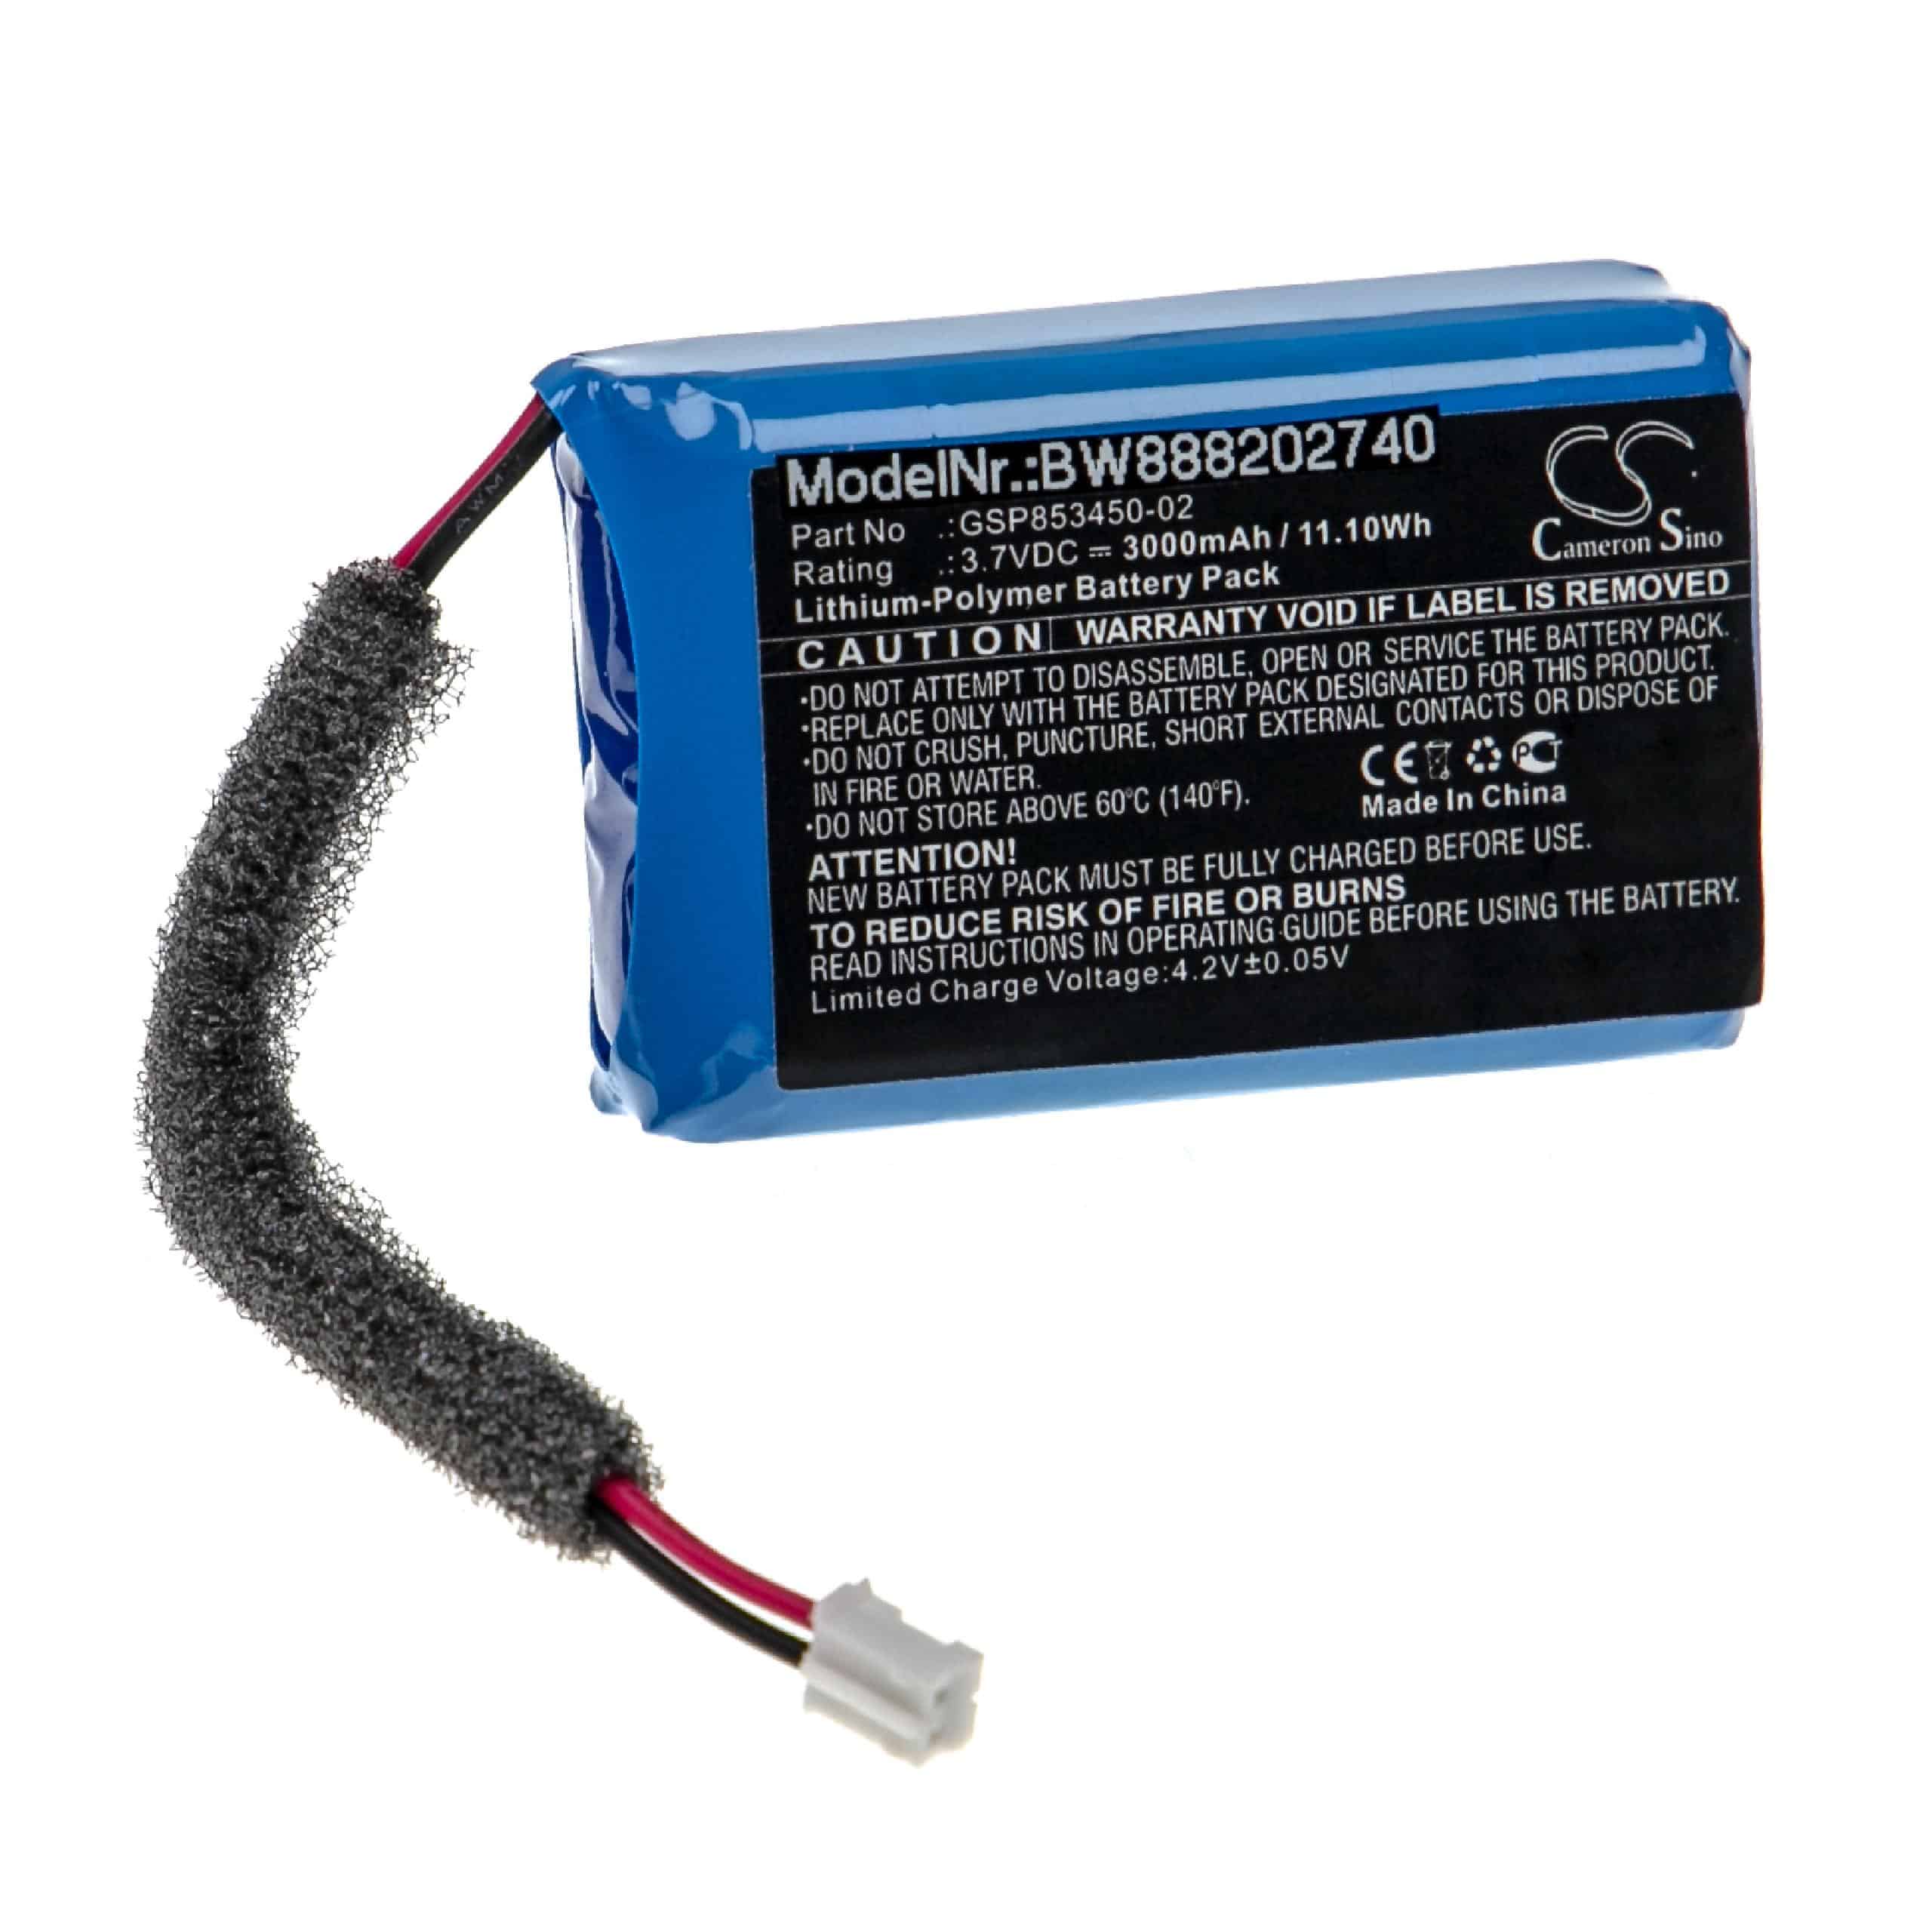 Batería reemplaza JBL GSP853450-02 para altavoces JBL - 3000 mAh 3,7 V Li-poli